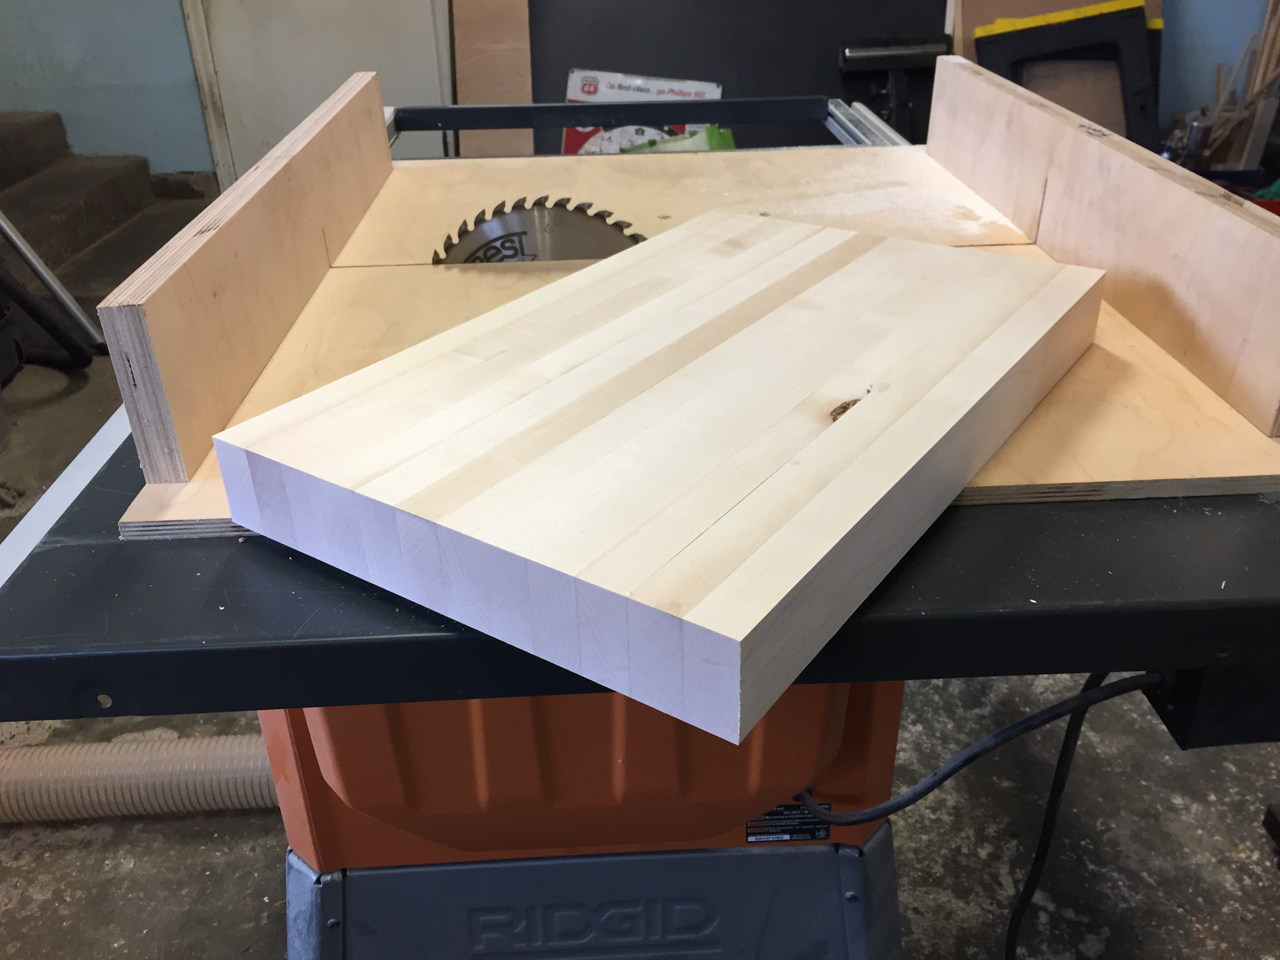 Cutting Board Build - First Orientation